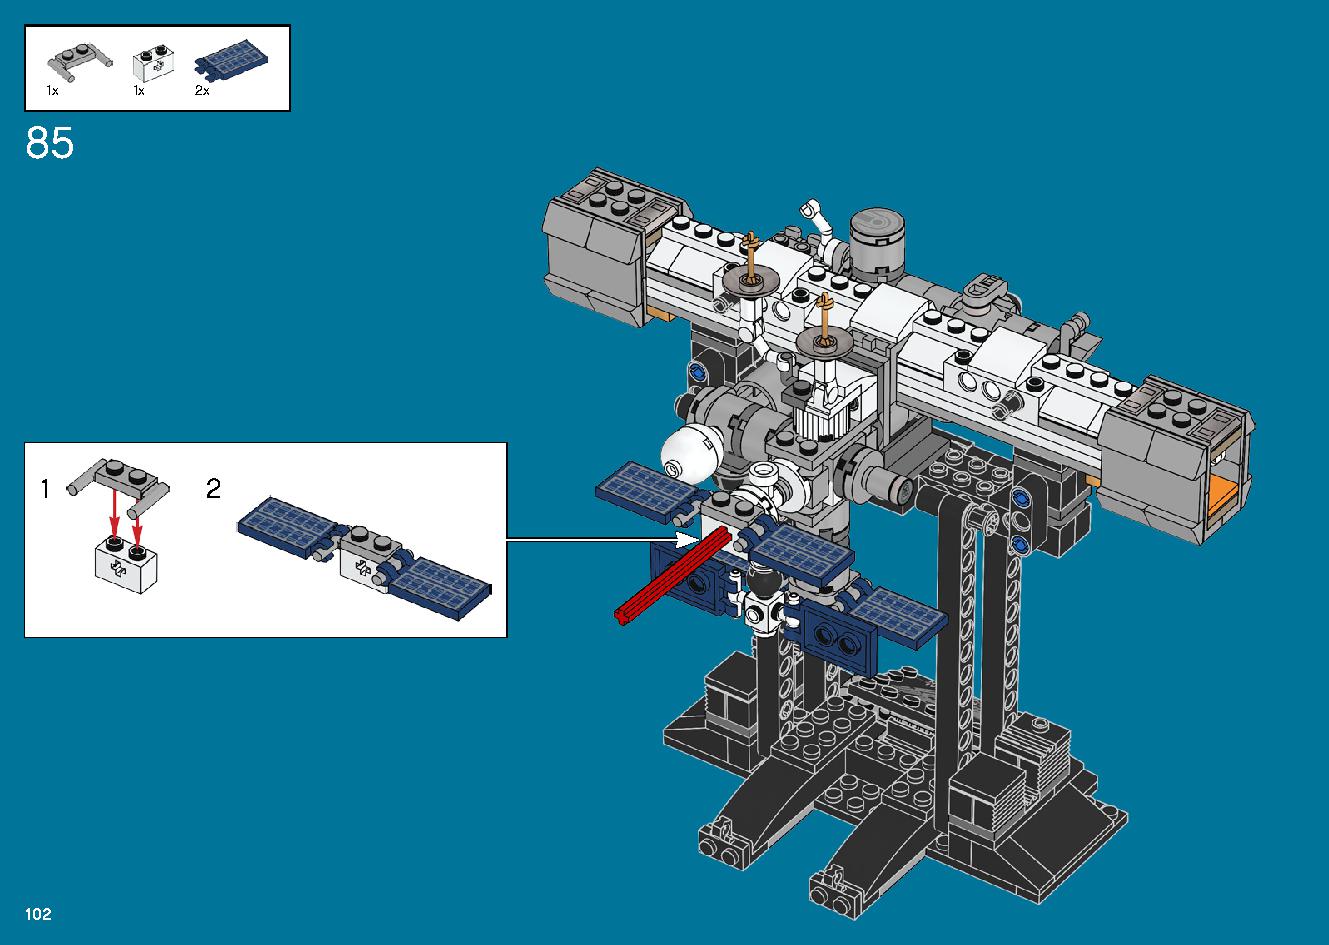 International Space Station 21321 レゴの商品情報 レゴの説明書・組立方法 102 page